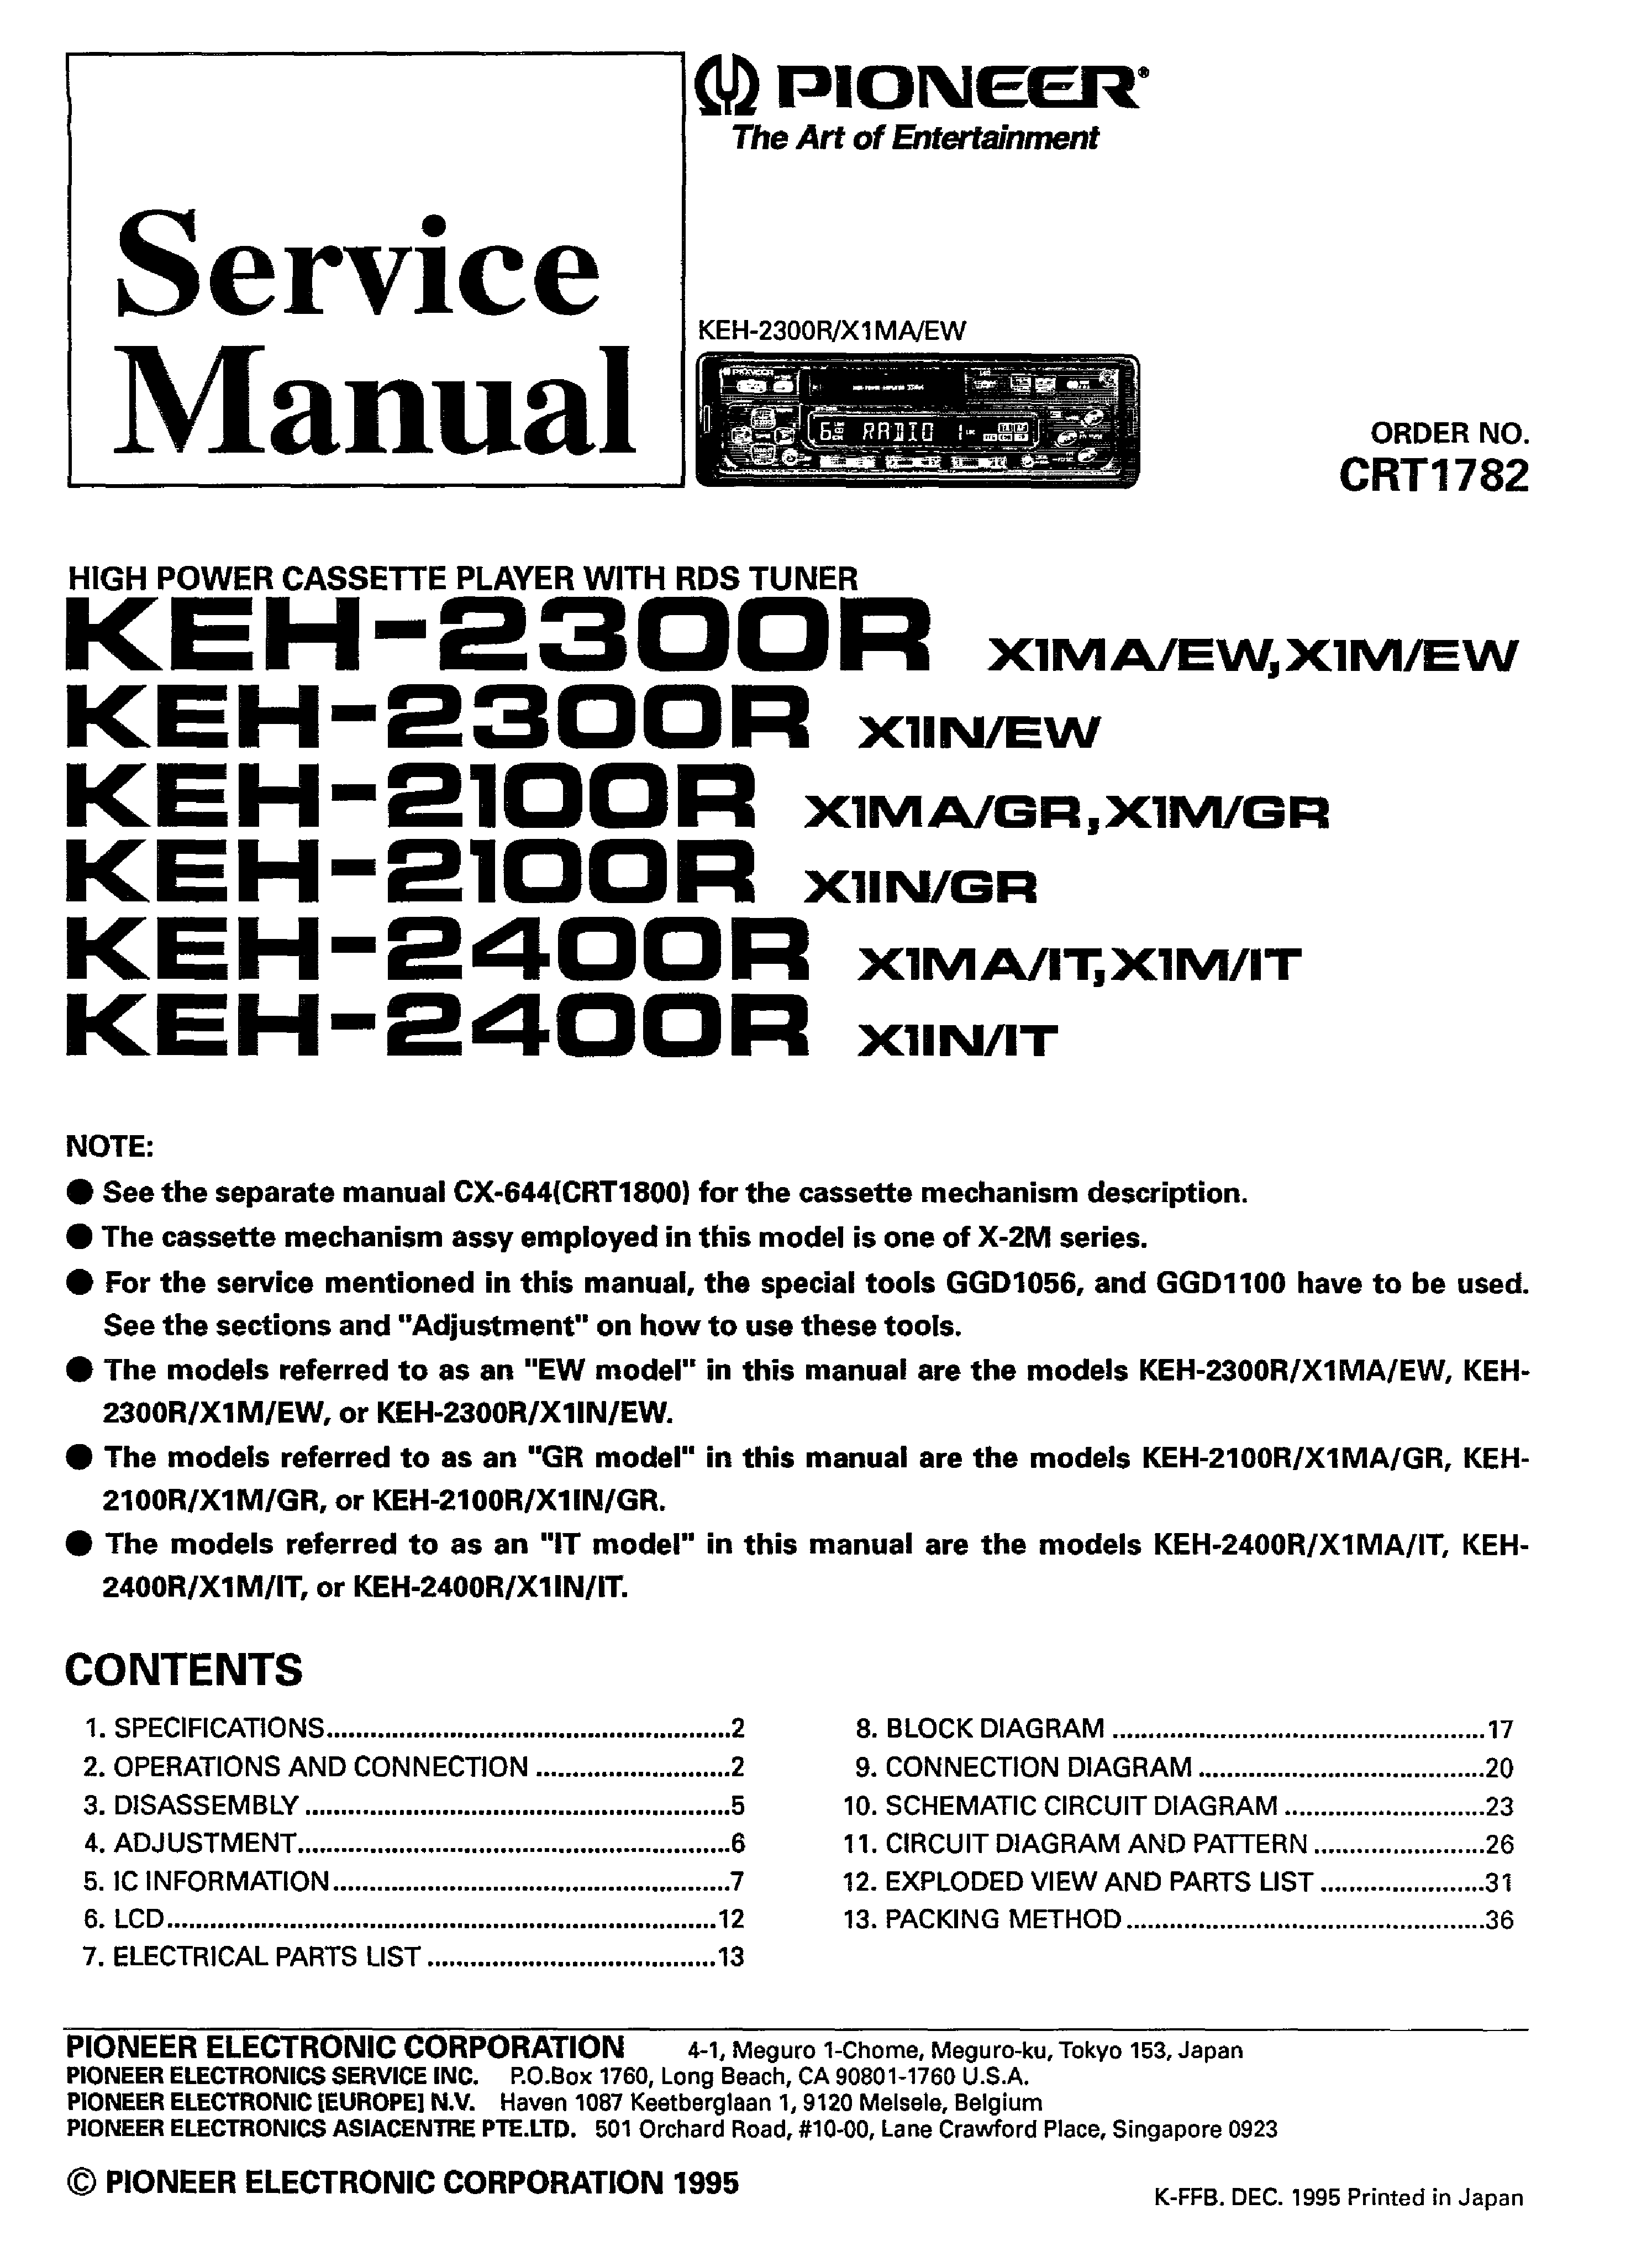 PIONEER KEH-2300 service manual (1st page)